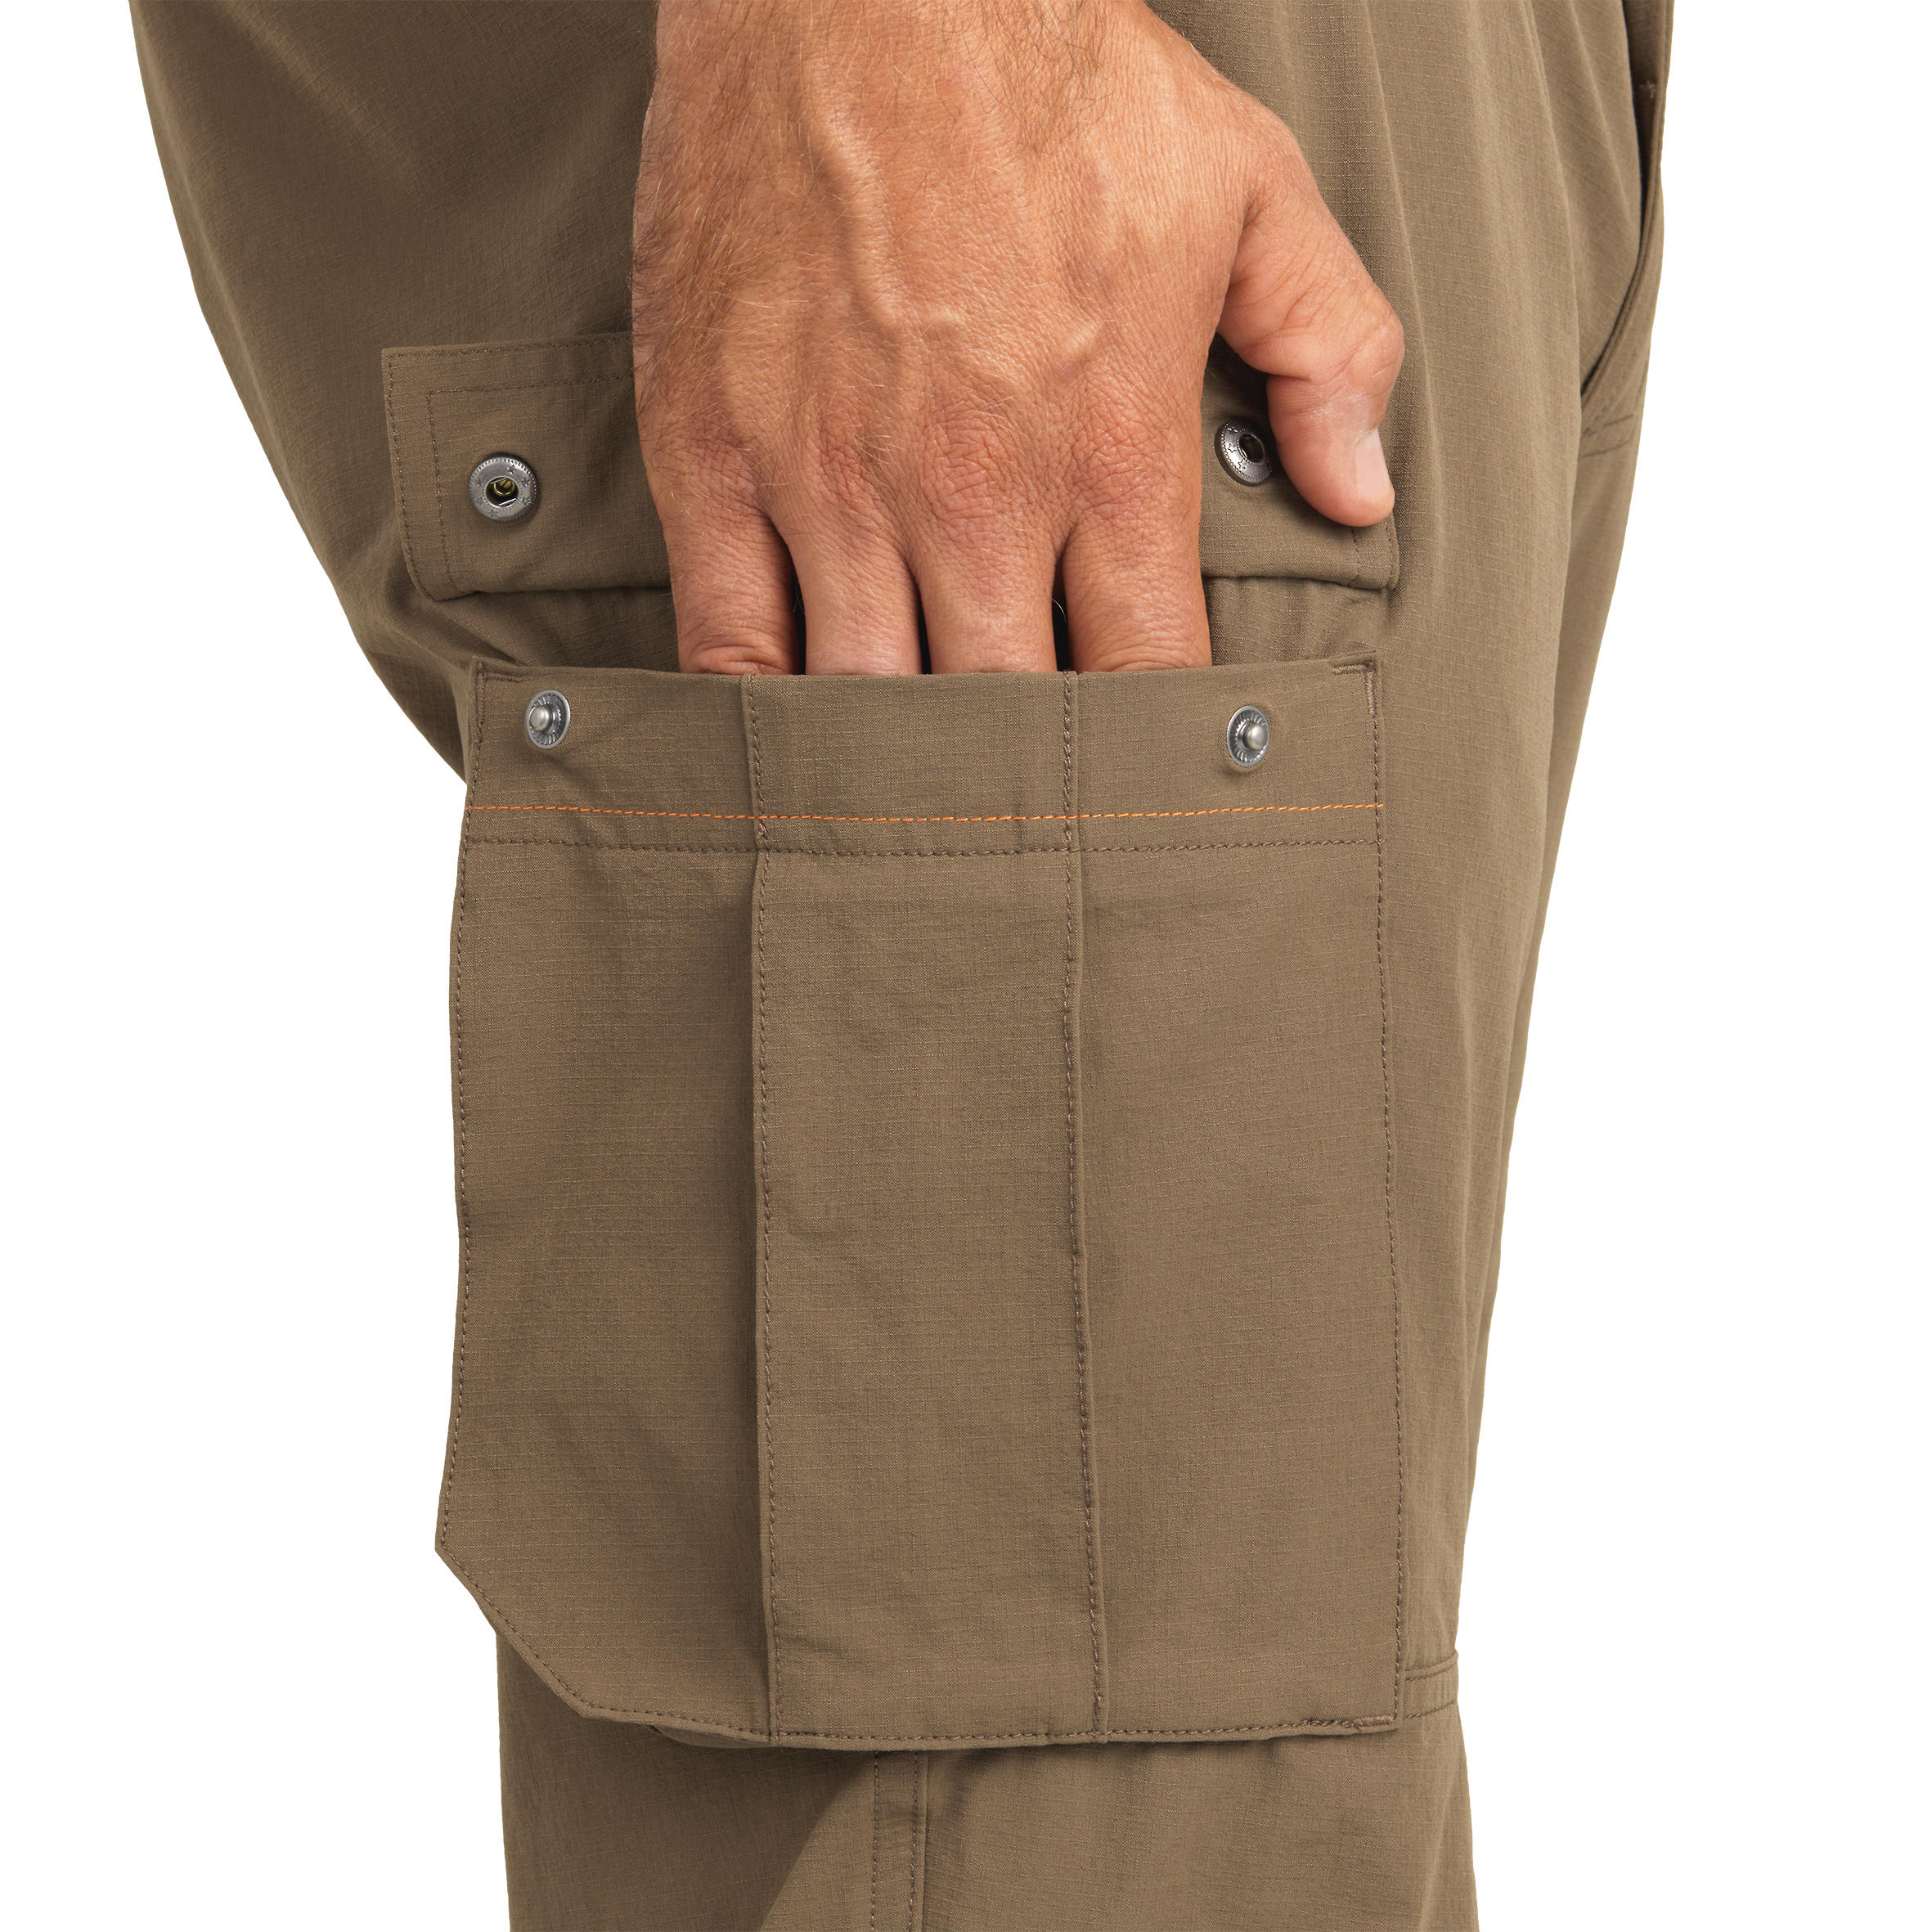 Men Breathable Lightweight Cargo Trousers Pants SG-500 - Beige